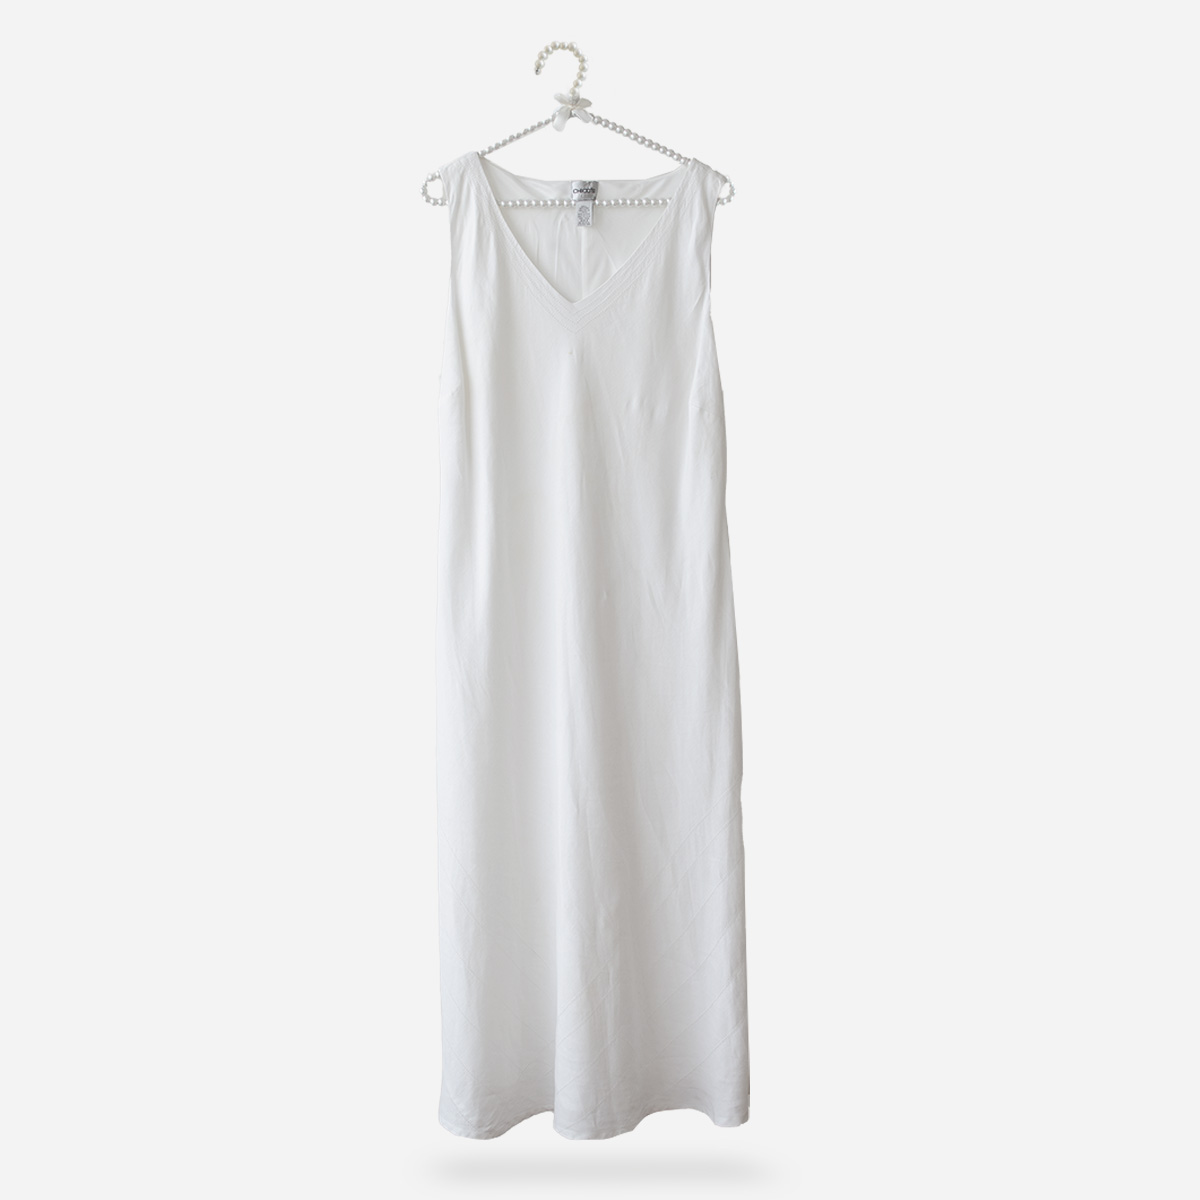 Chicos white linen dress